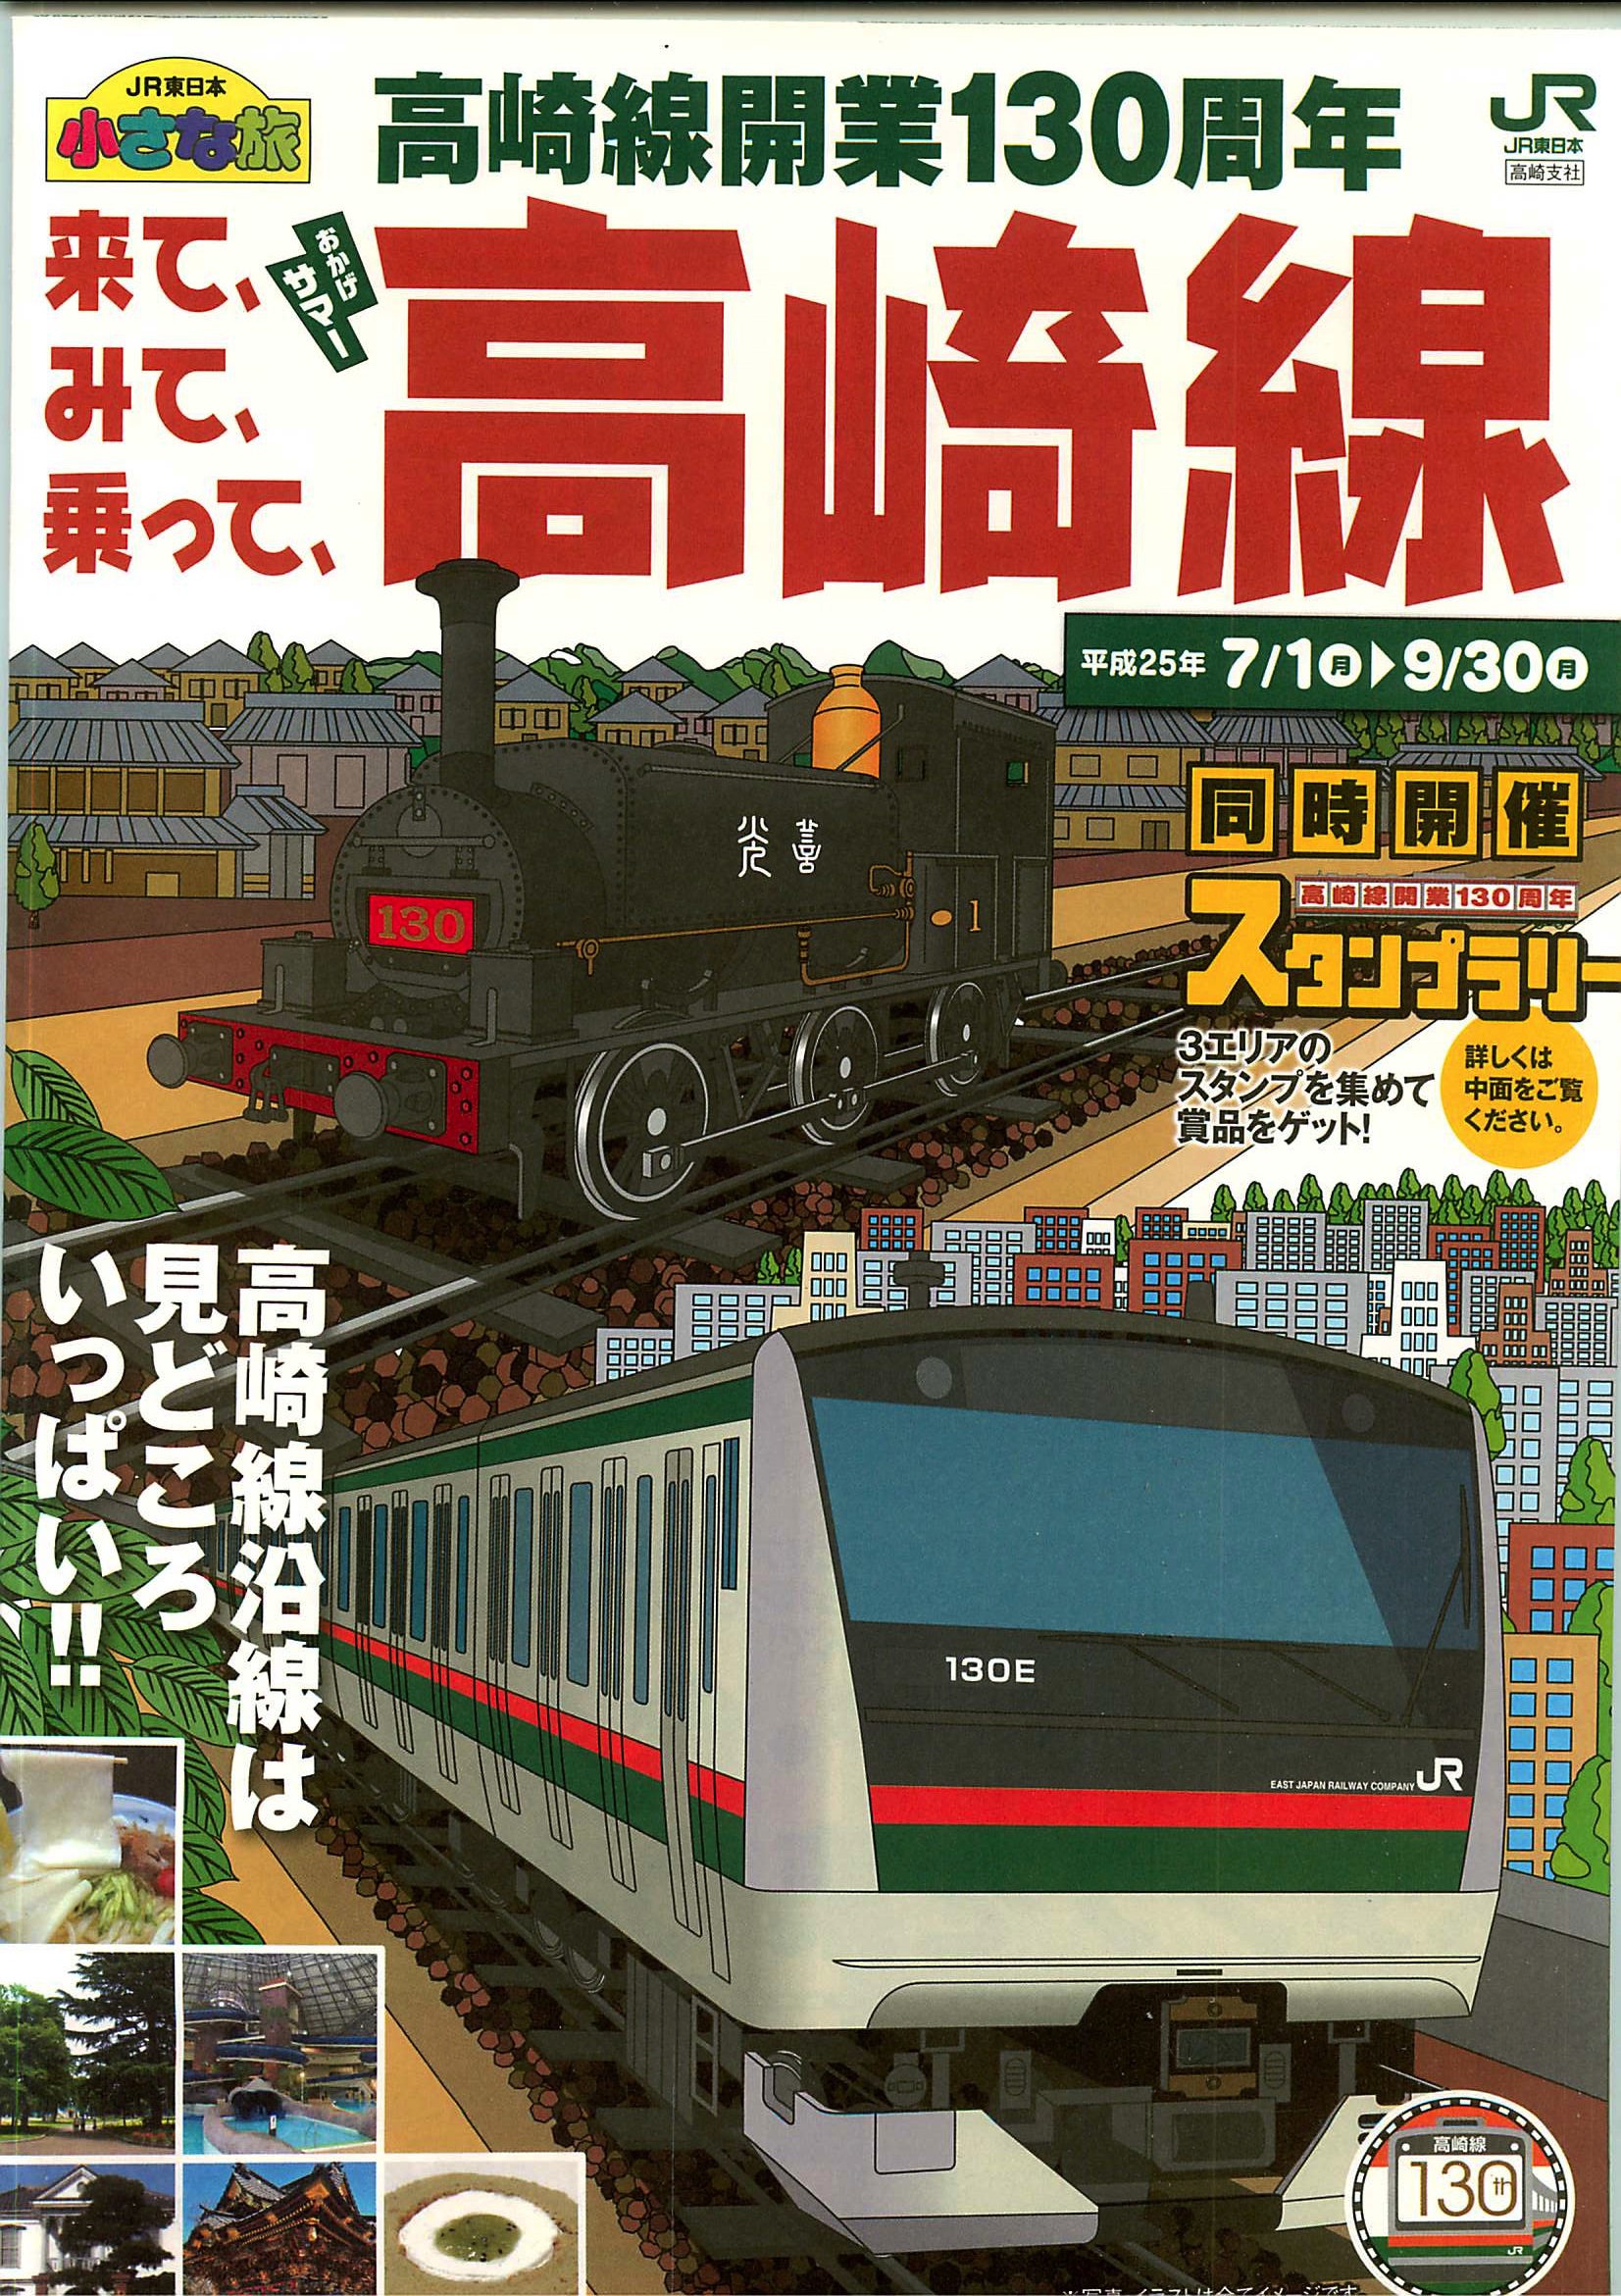 takasaki-line-130-001